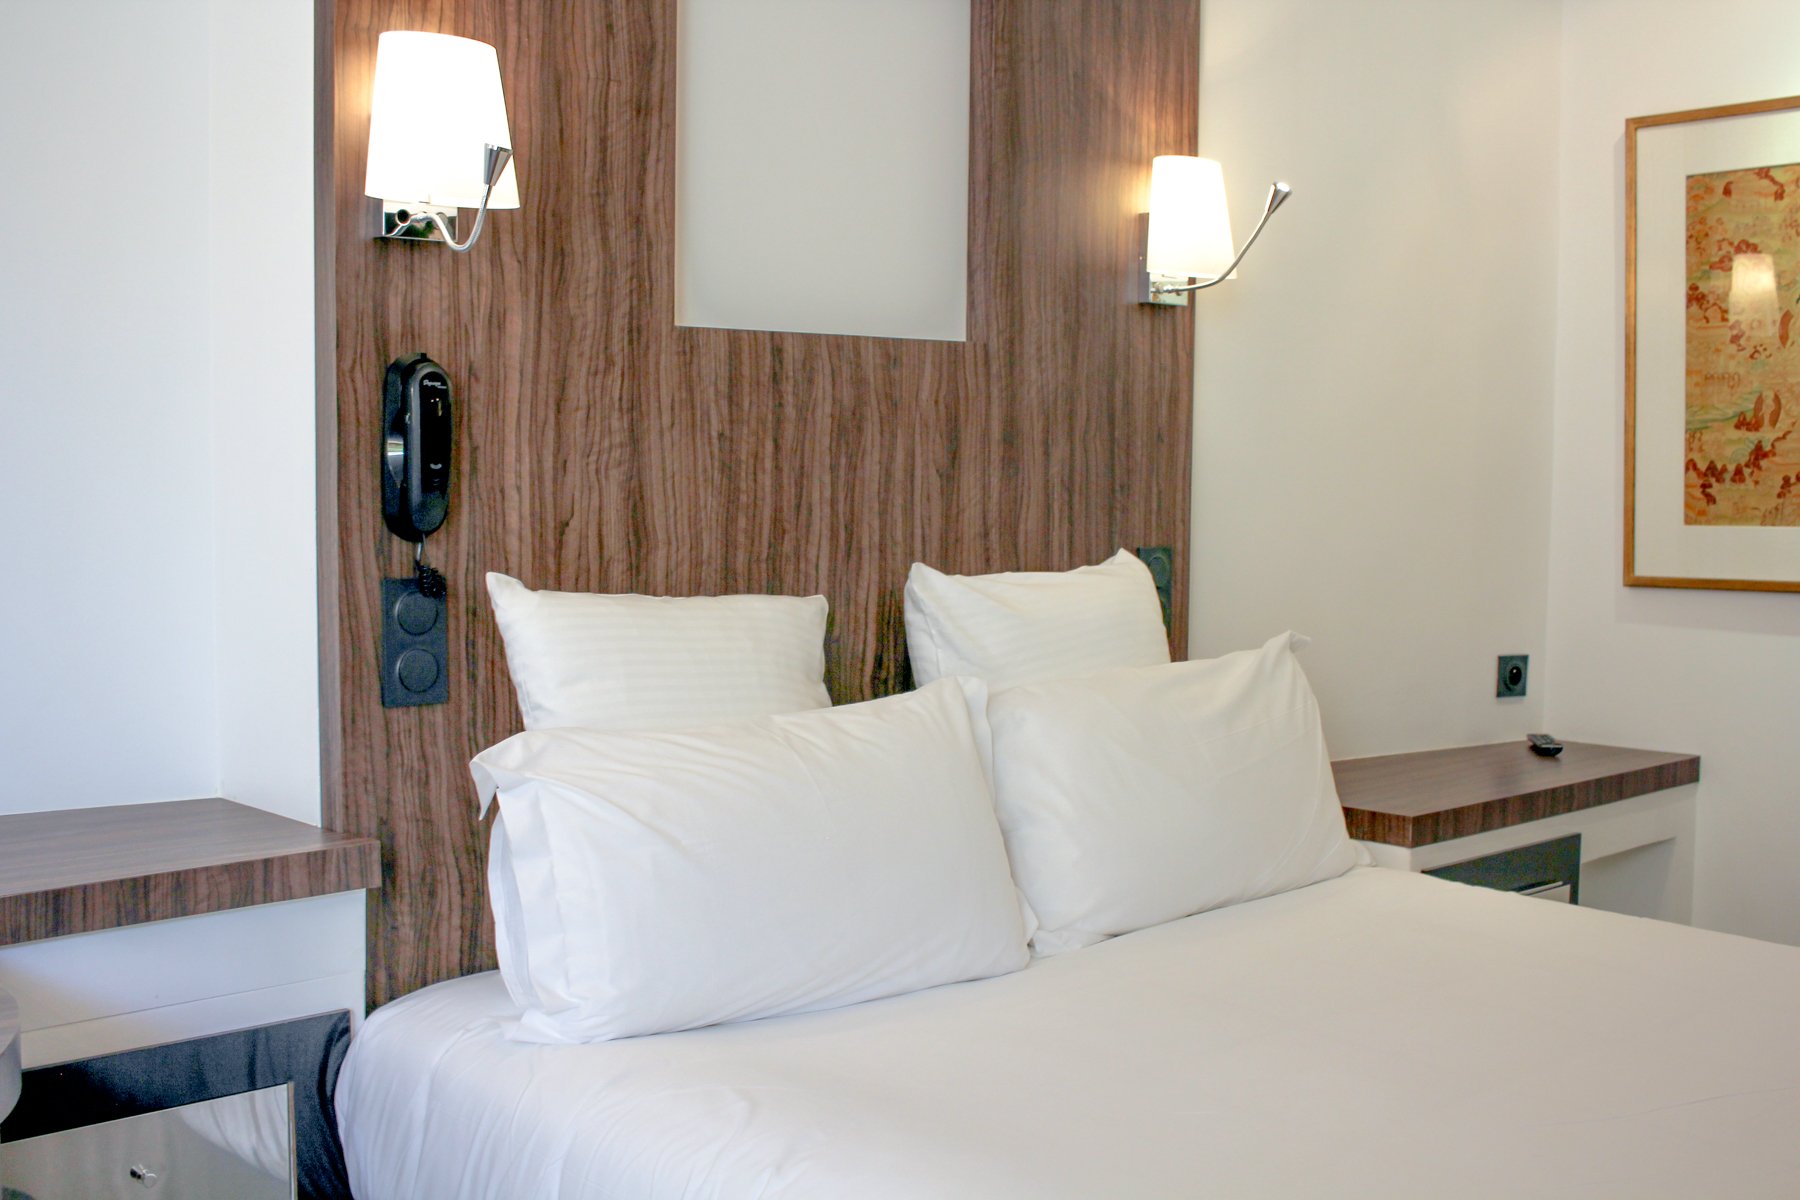 Hotel Monsigny Nice | Suite | Bedroom